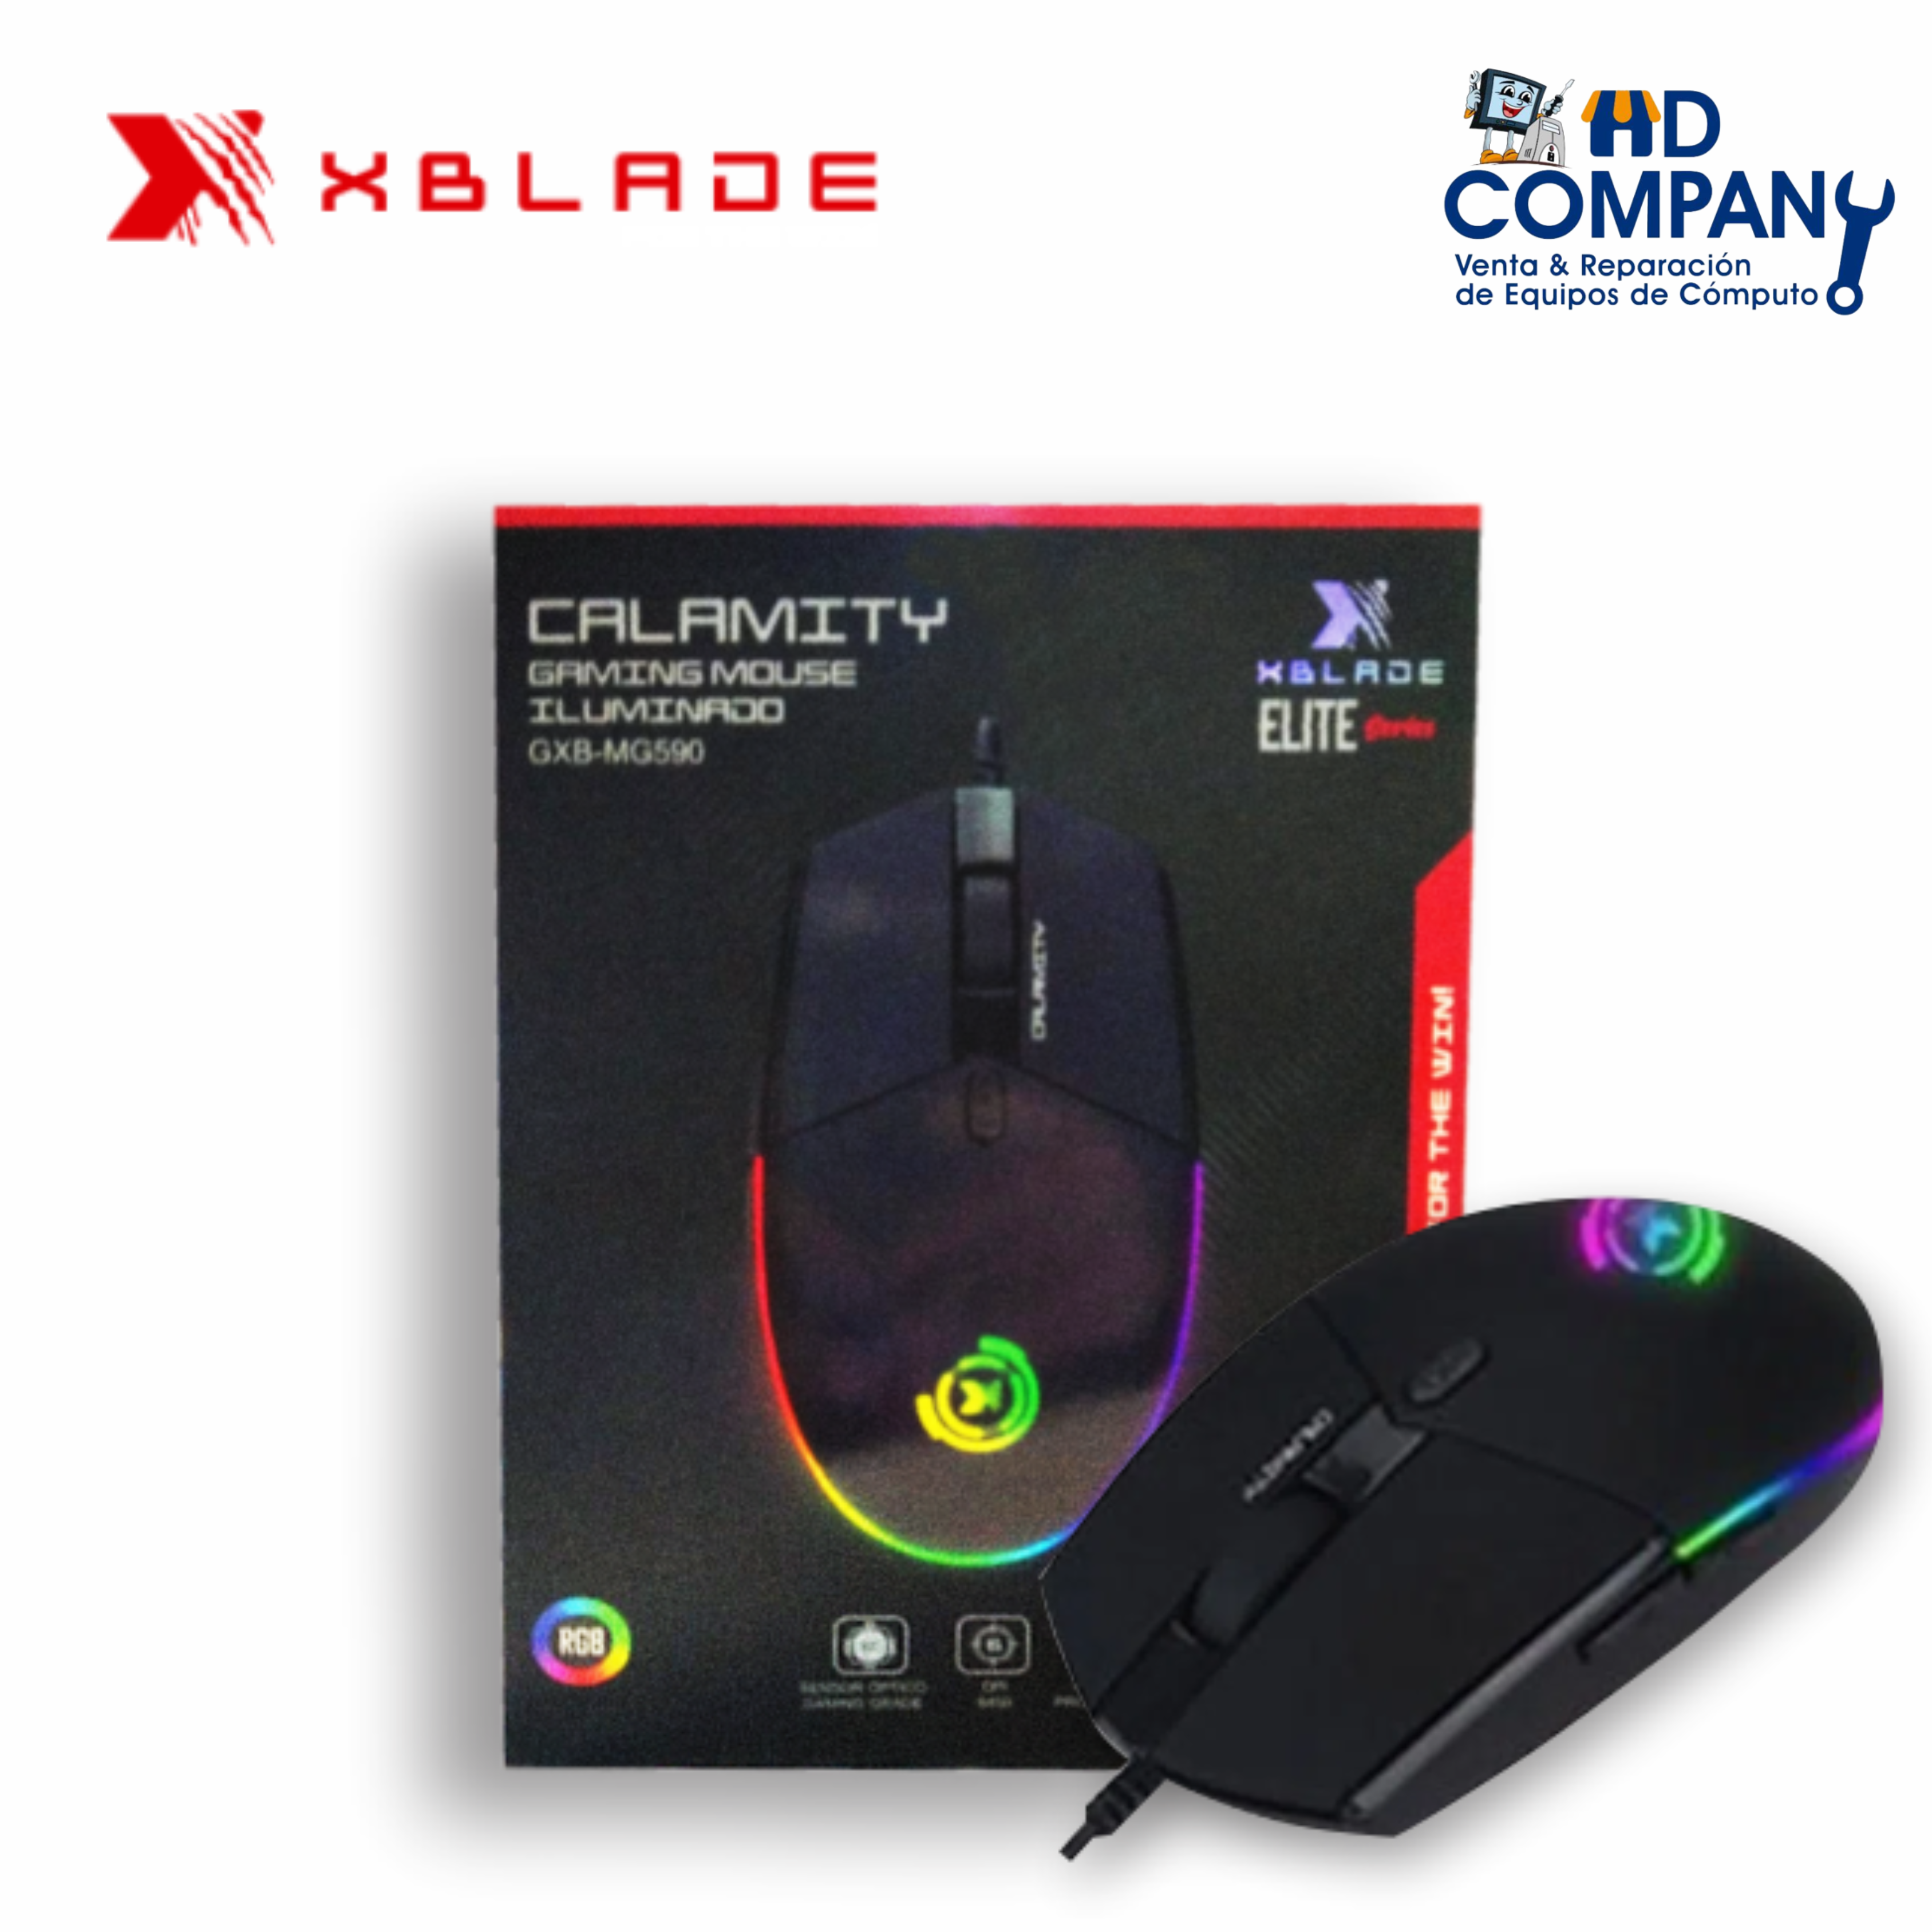 Mouse XBLADE ELITE CALAMITY gamer 6400 DPI RGB BLACK 6 BOTONES GXB MG590